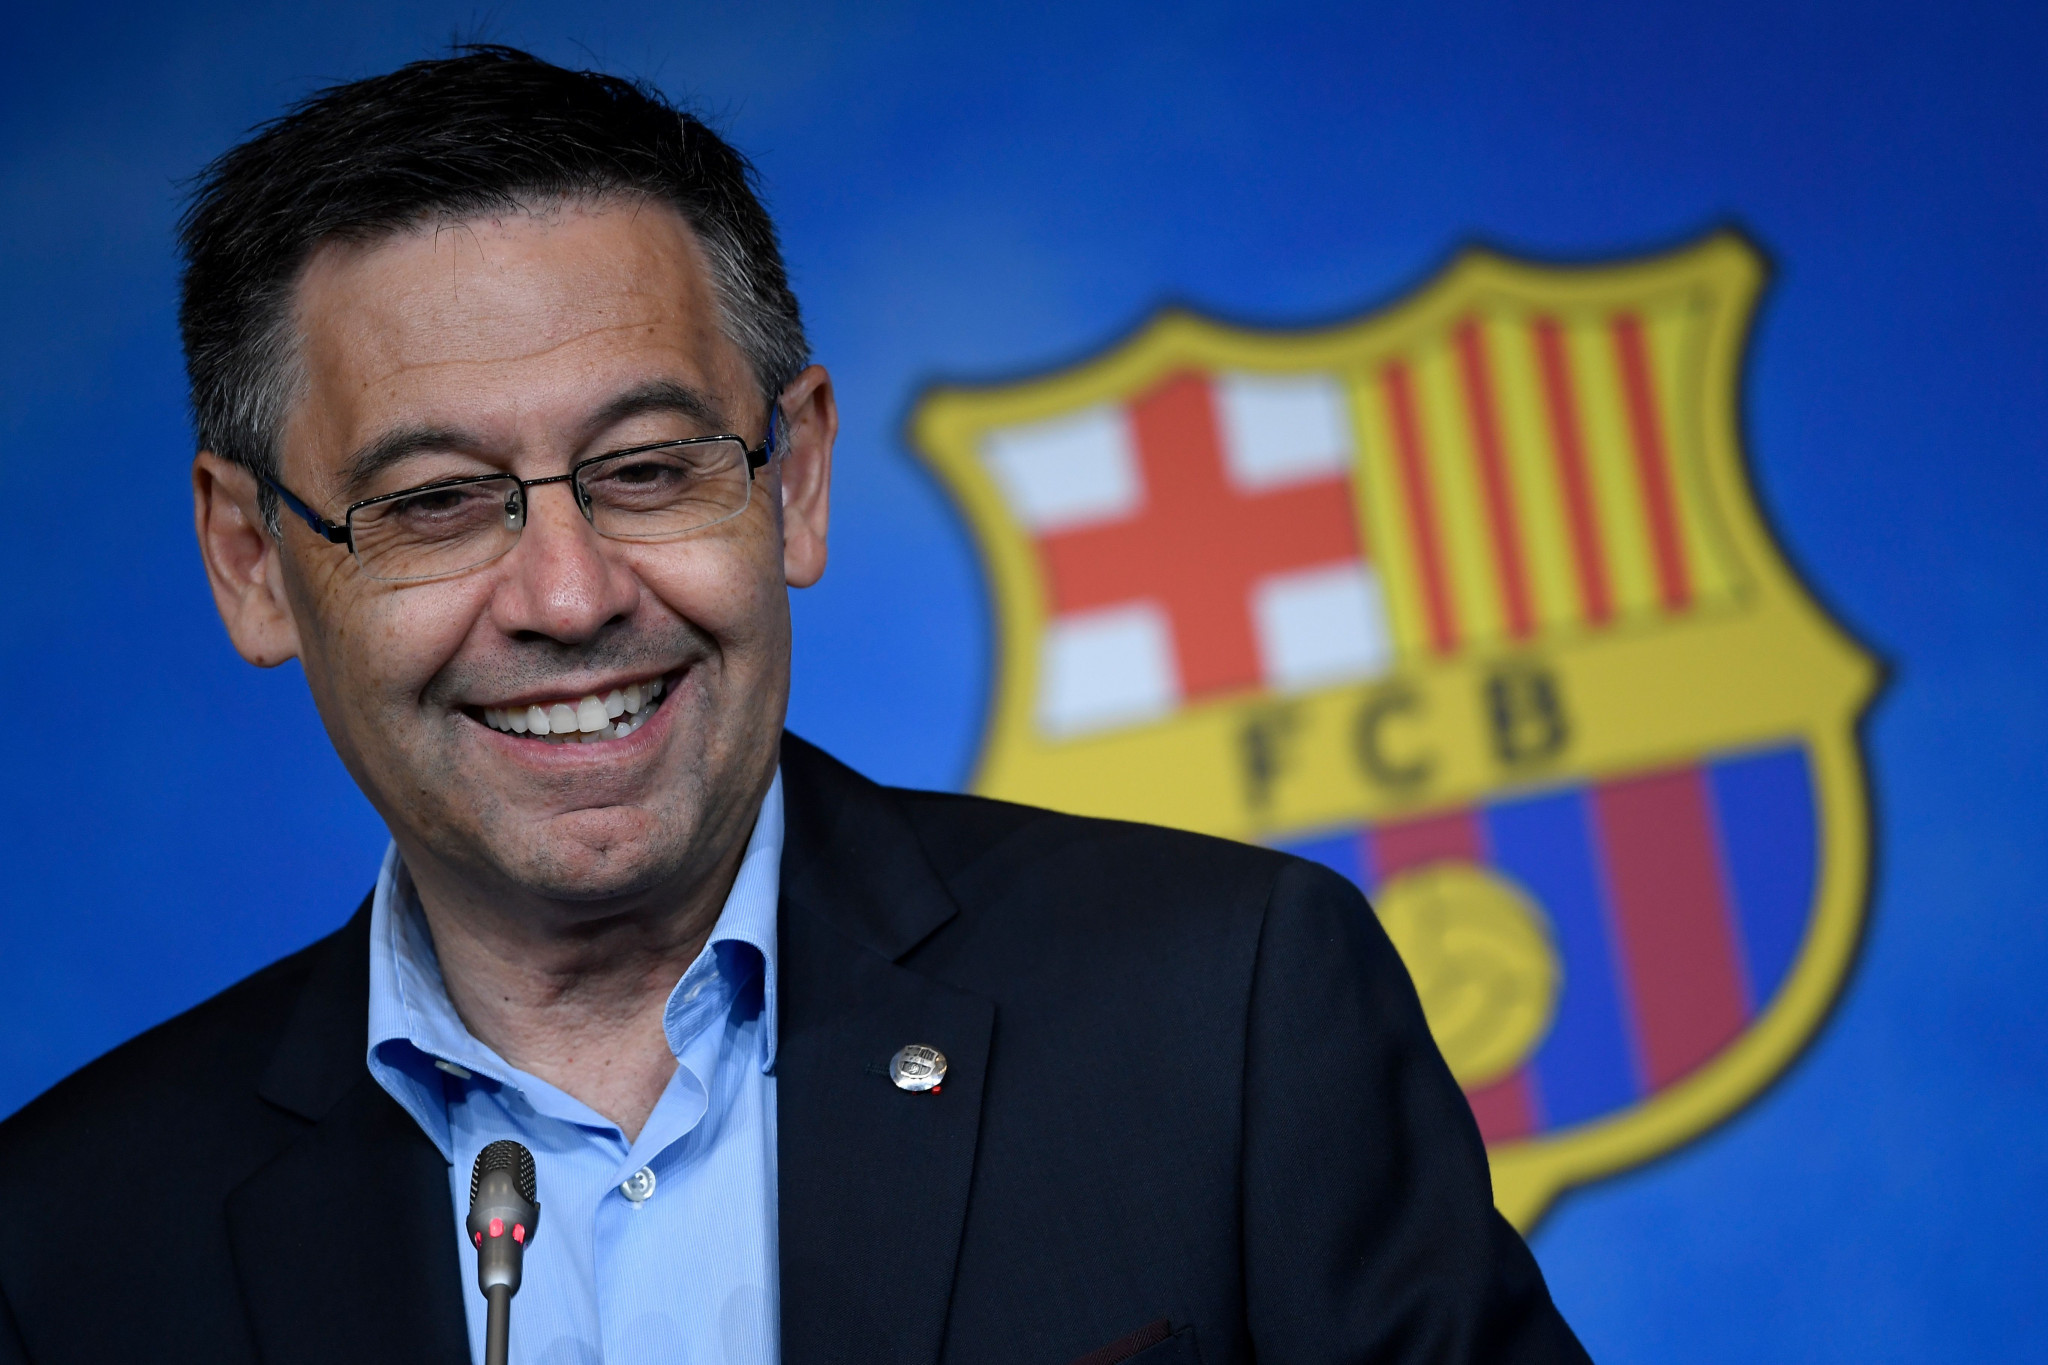 FC Barcelona President Josep Maria Bortomeu has said the club will not participate in "violent" esports games ©Getty Images